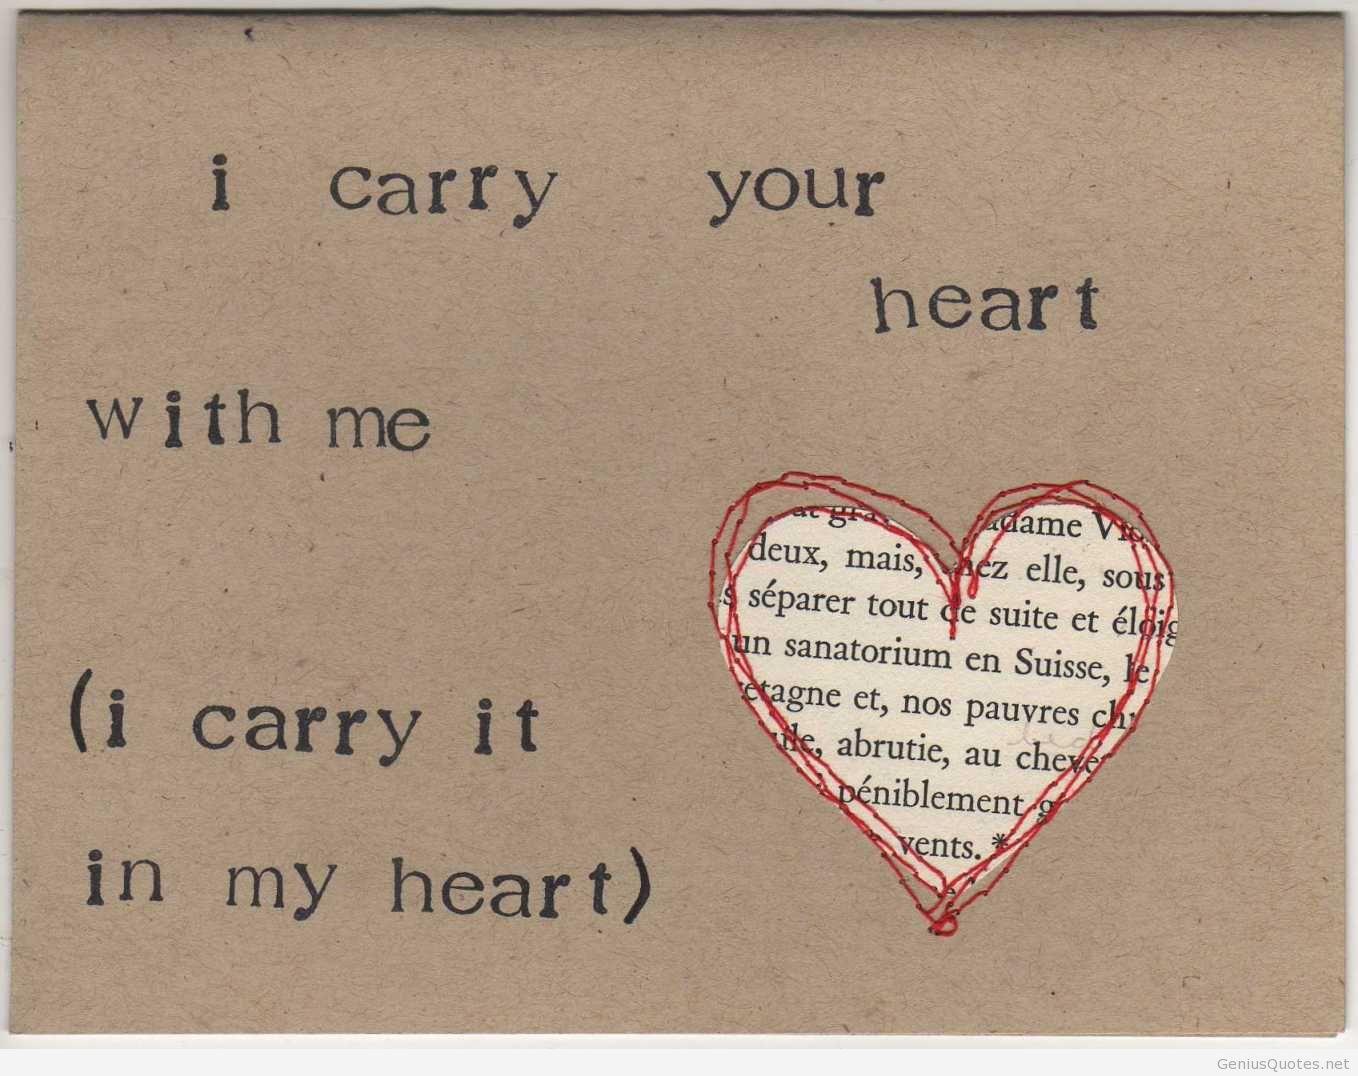 valentines day poems